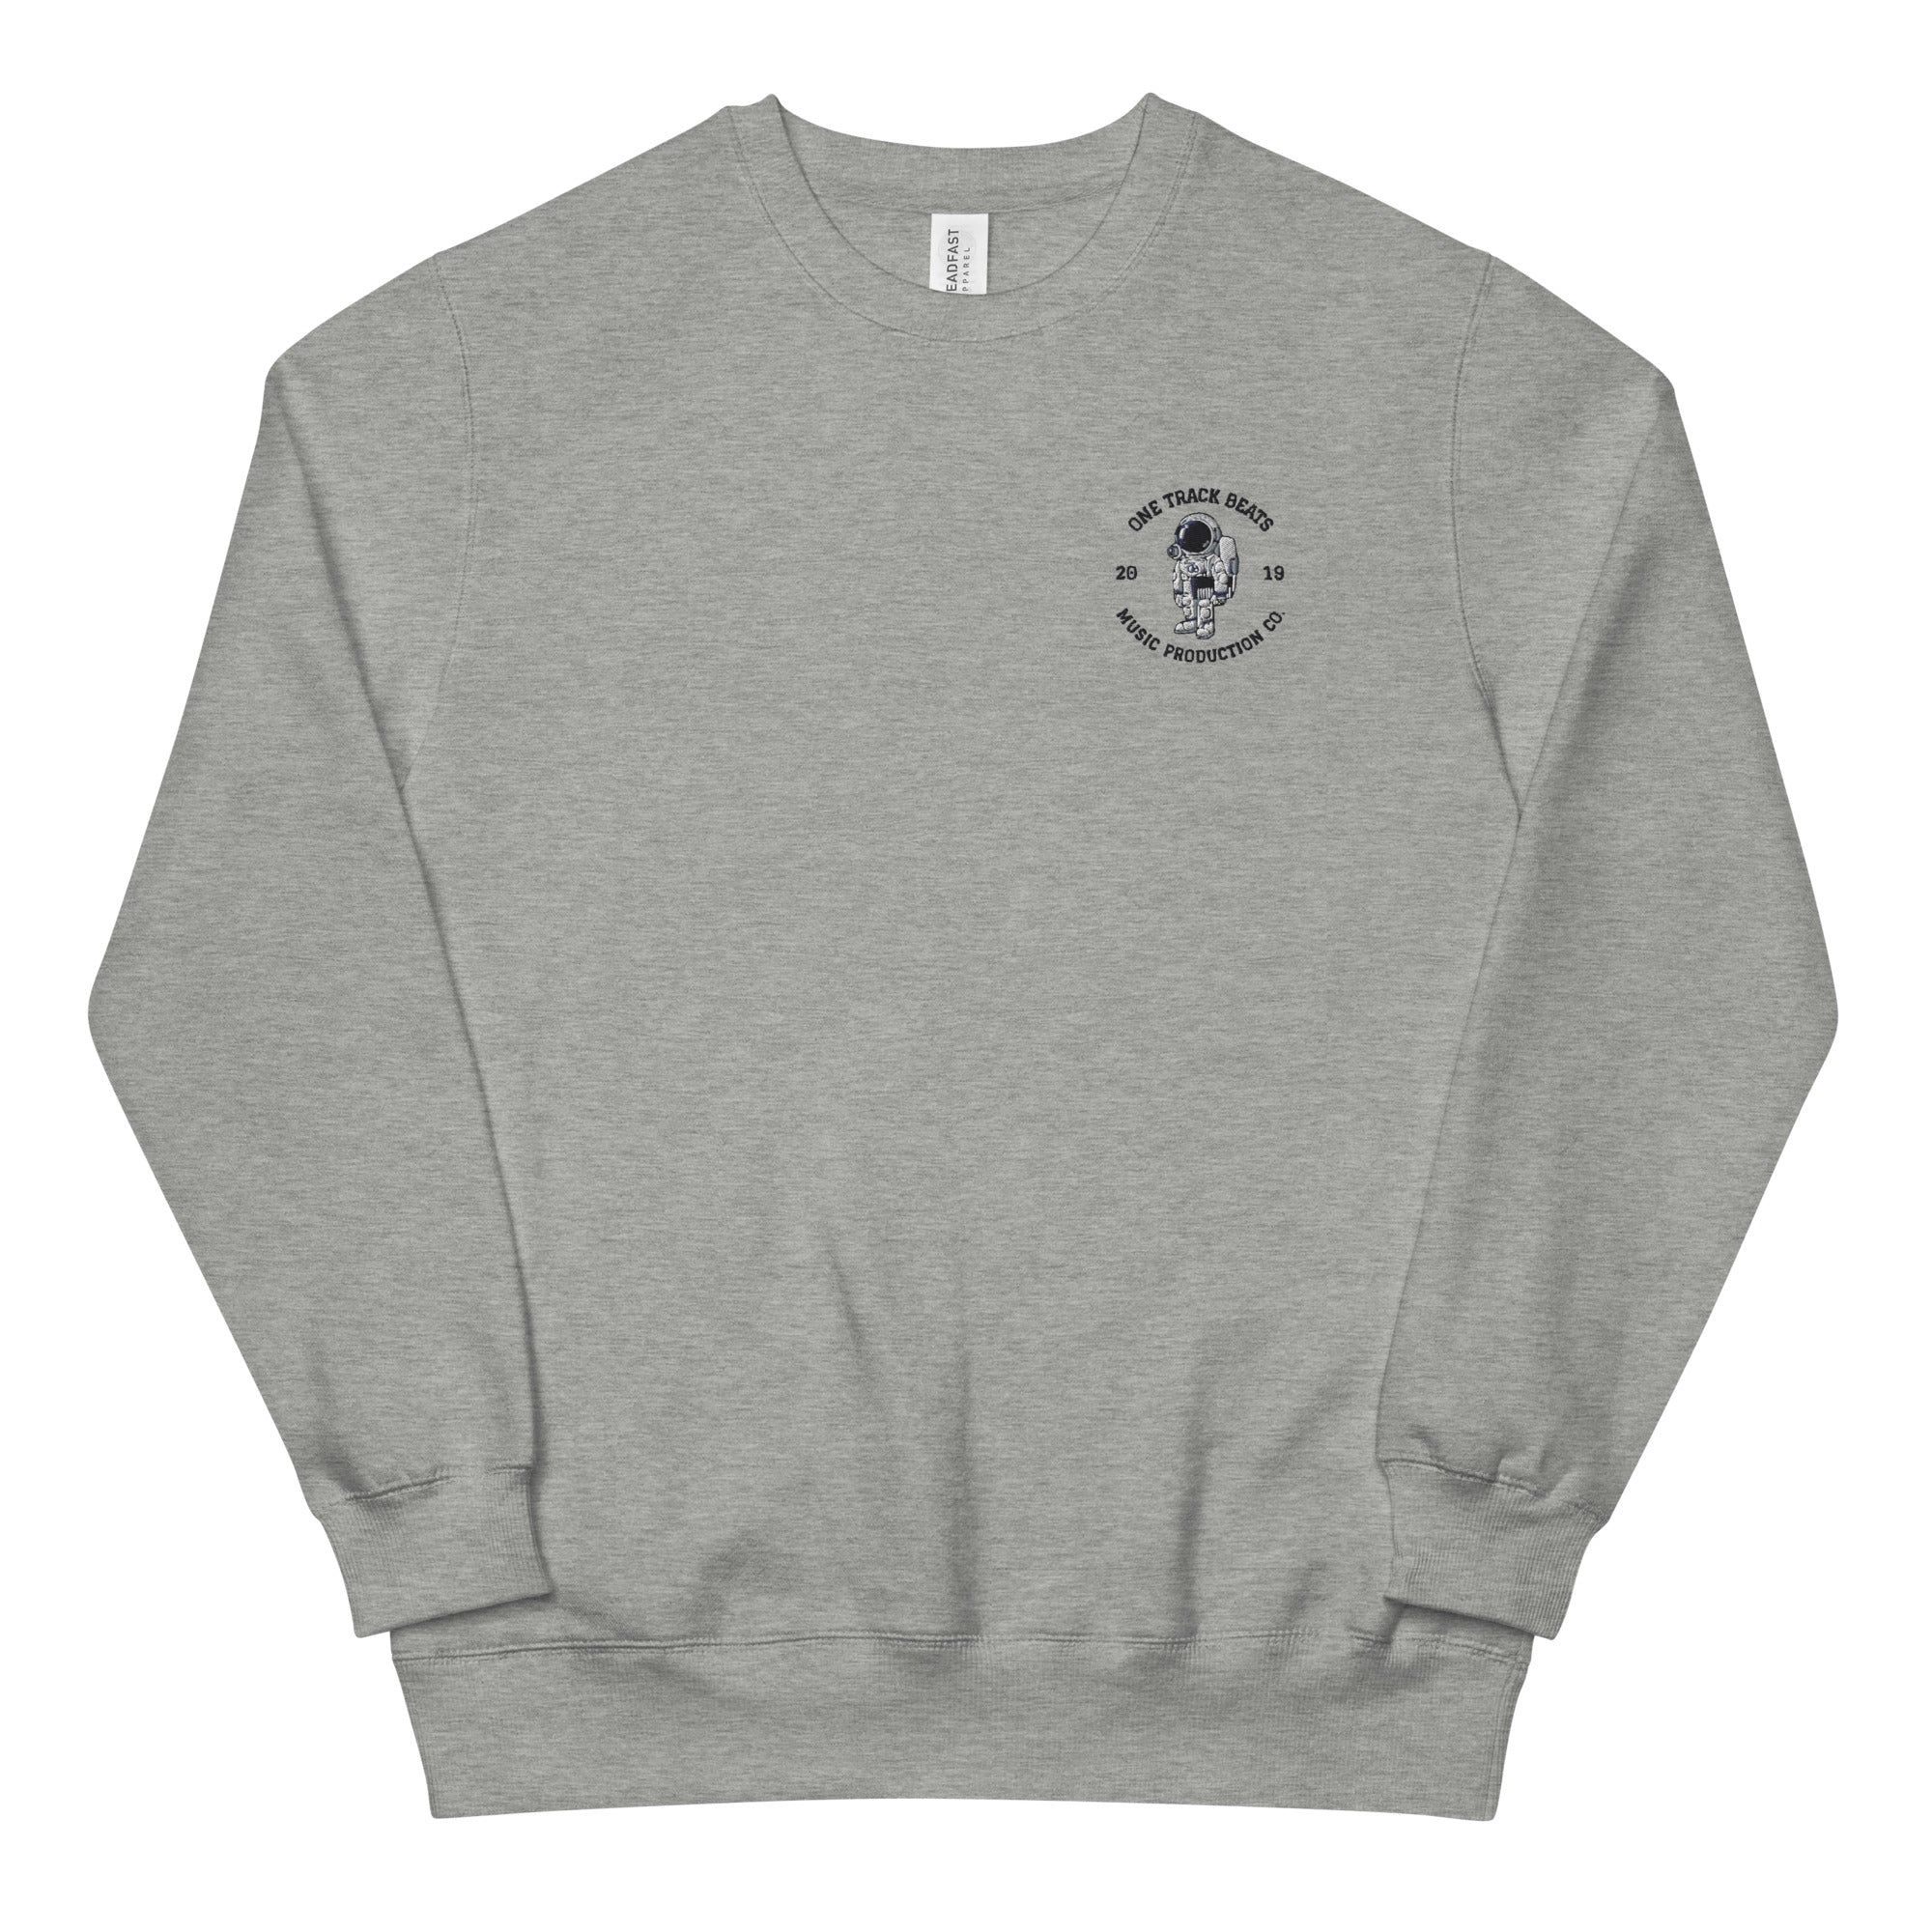 Unisex embroidered legacy sweatshirt